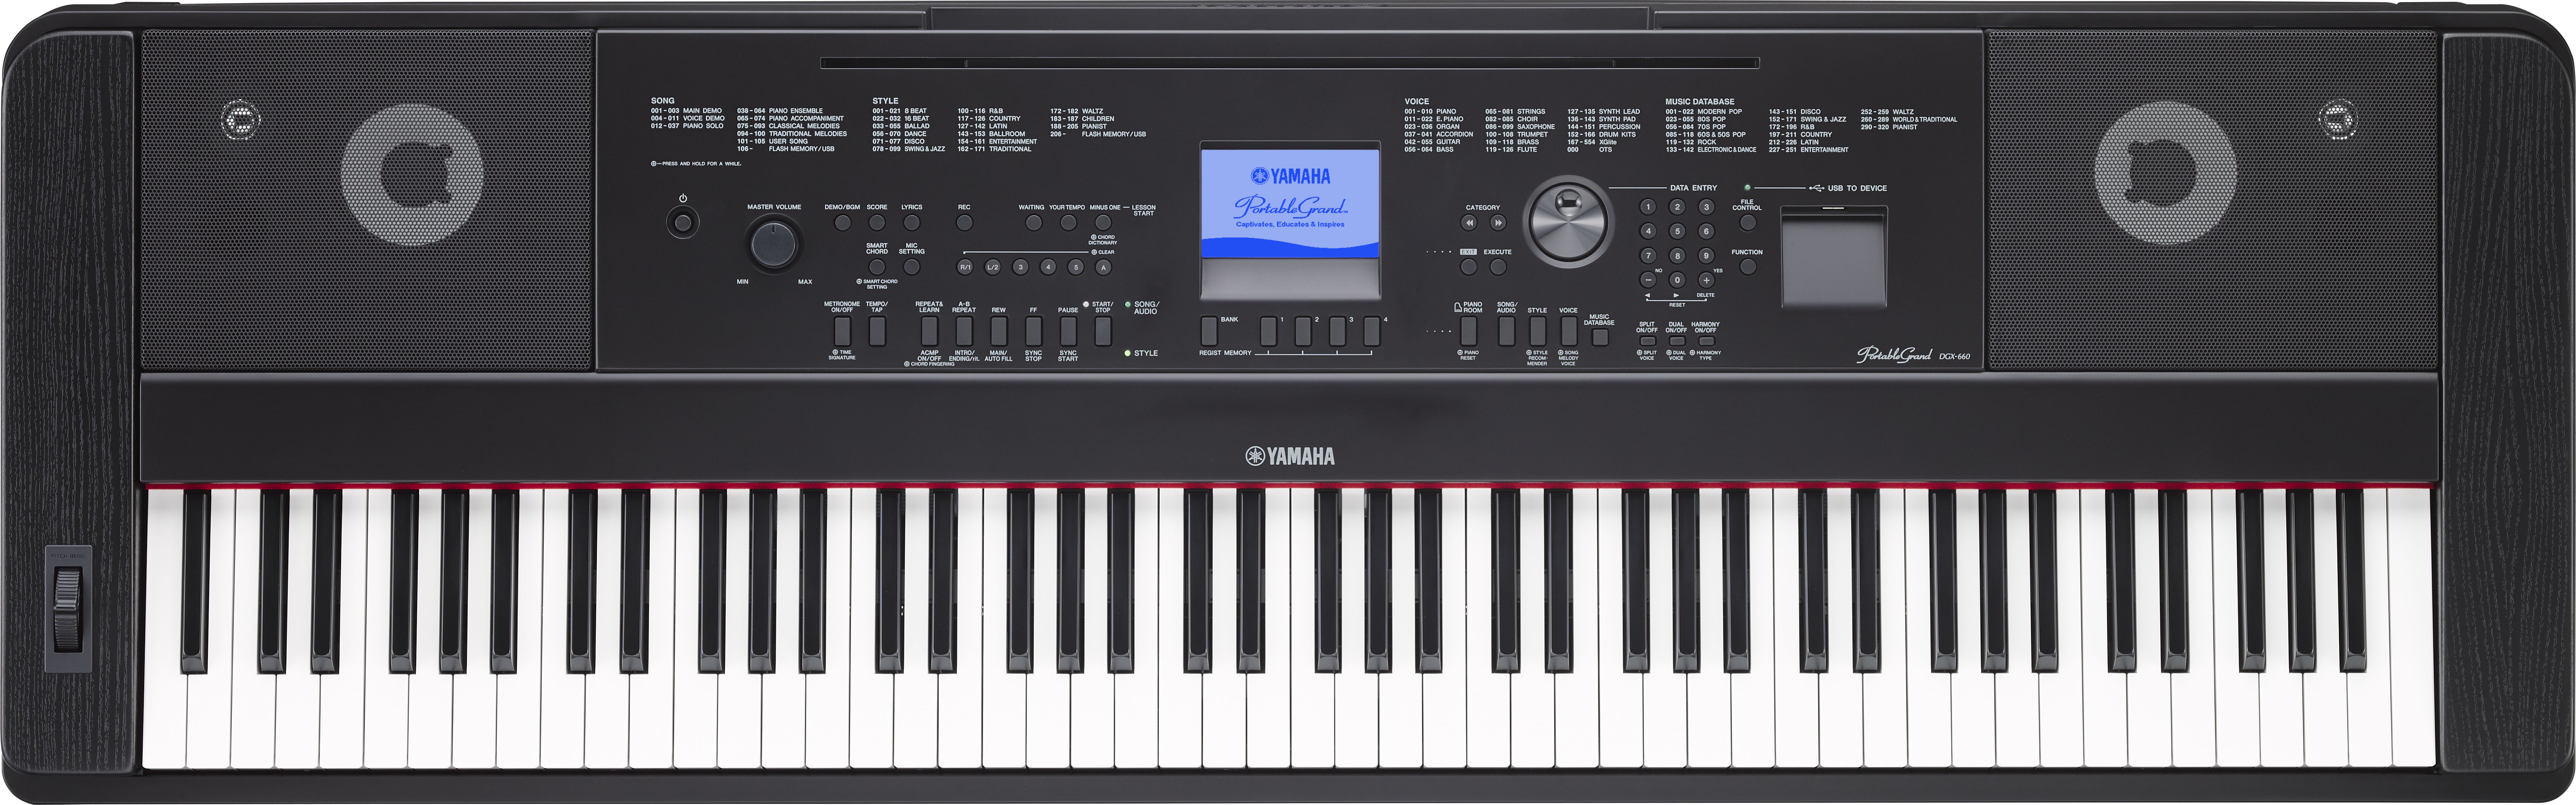 Yamaha Dgx-660 - Black - Digital piano with stand - Variation 2